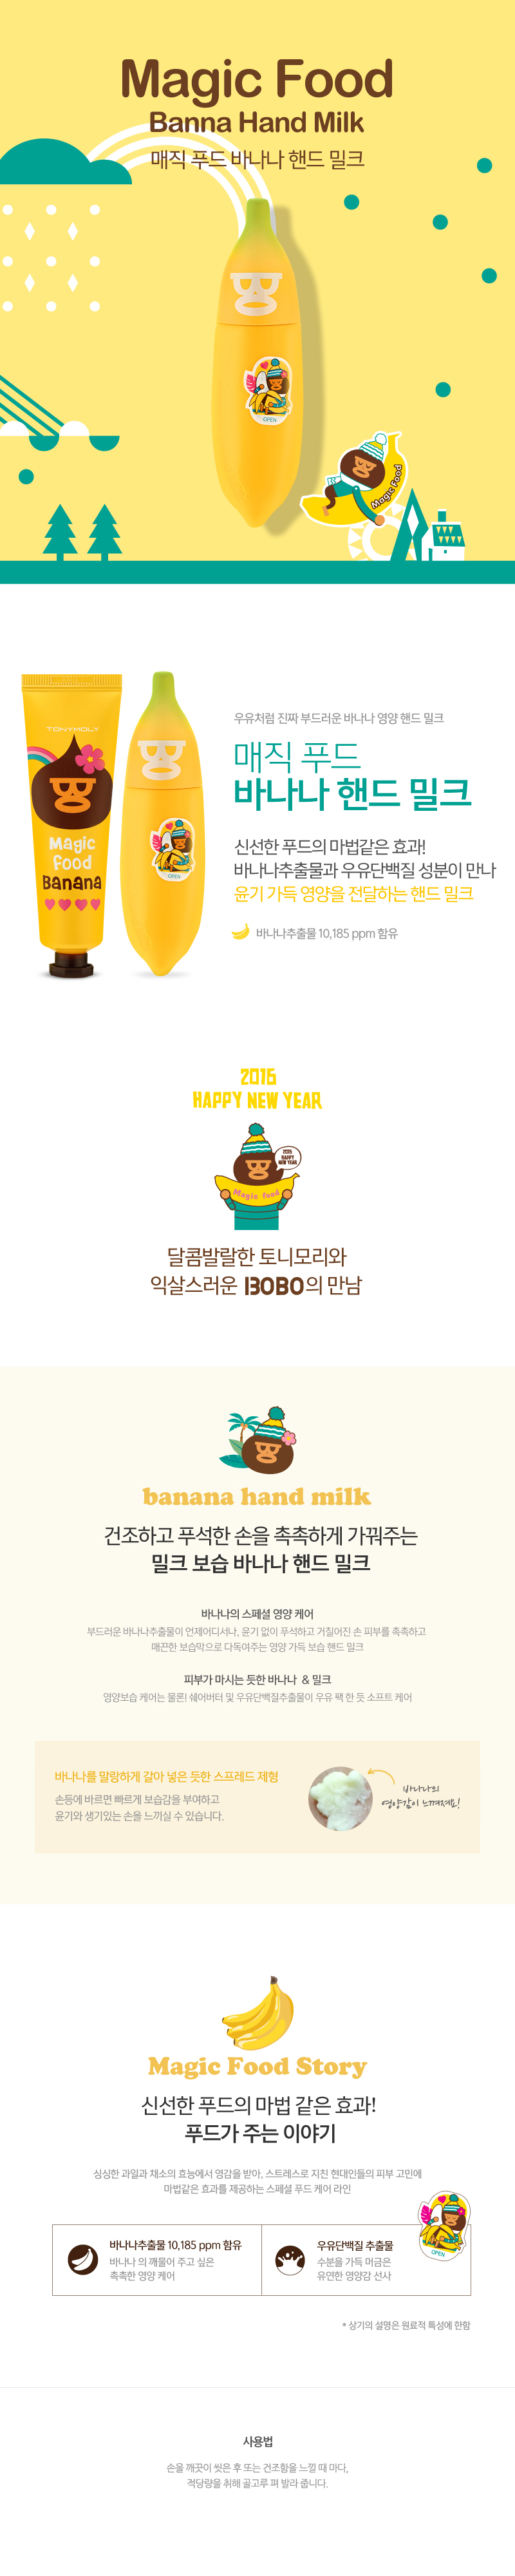 tonymoly-magic-food-banana-hand-milk-desc.jpg